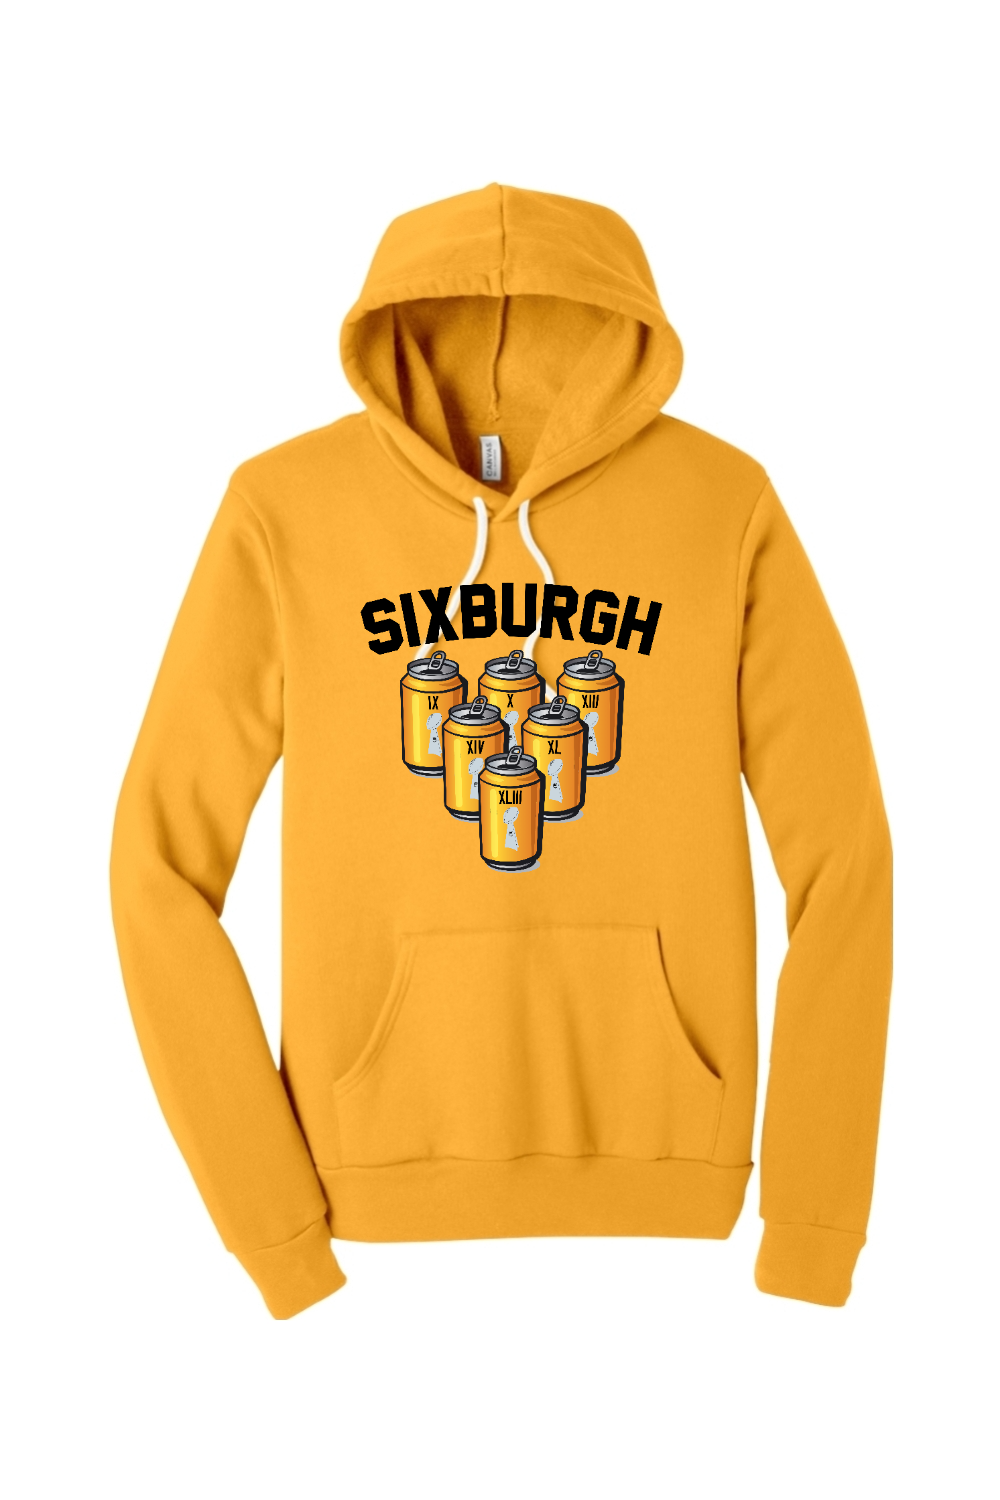 Sixburgh - Premium Sponge Fleece Hoodie